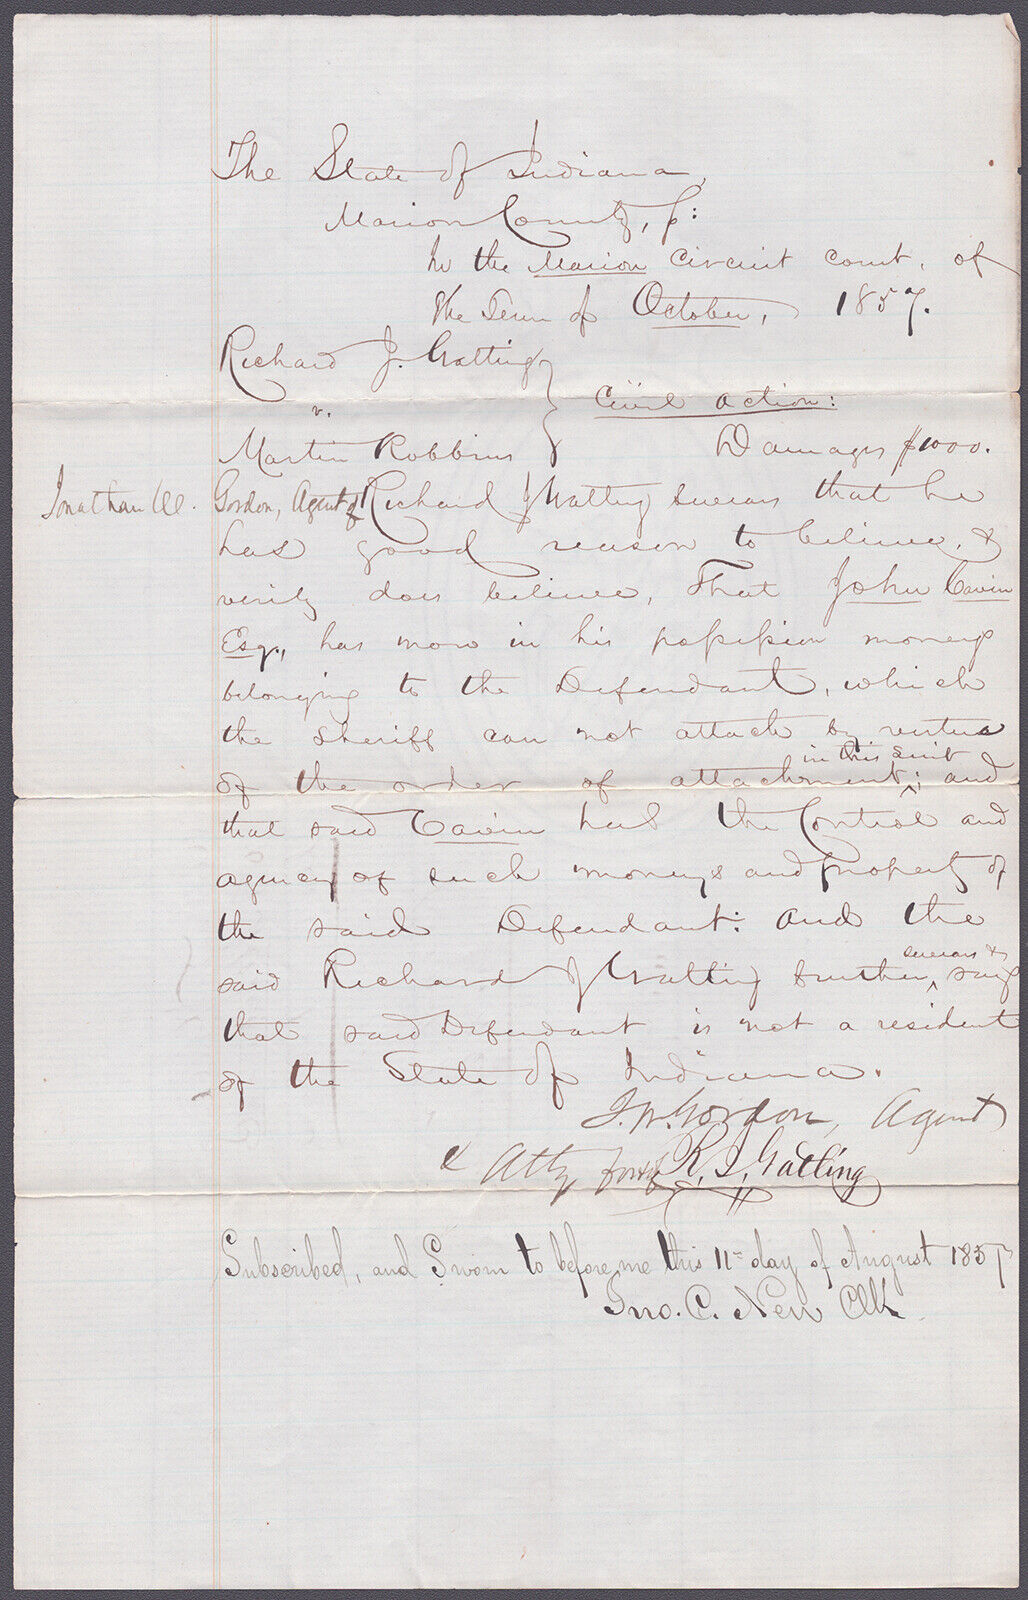 RICHARD J. GATLING - DOCUMENT SIGNED 10/1857